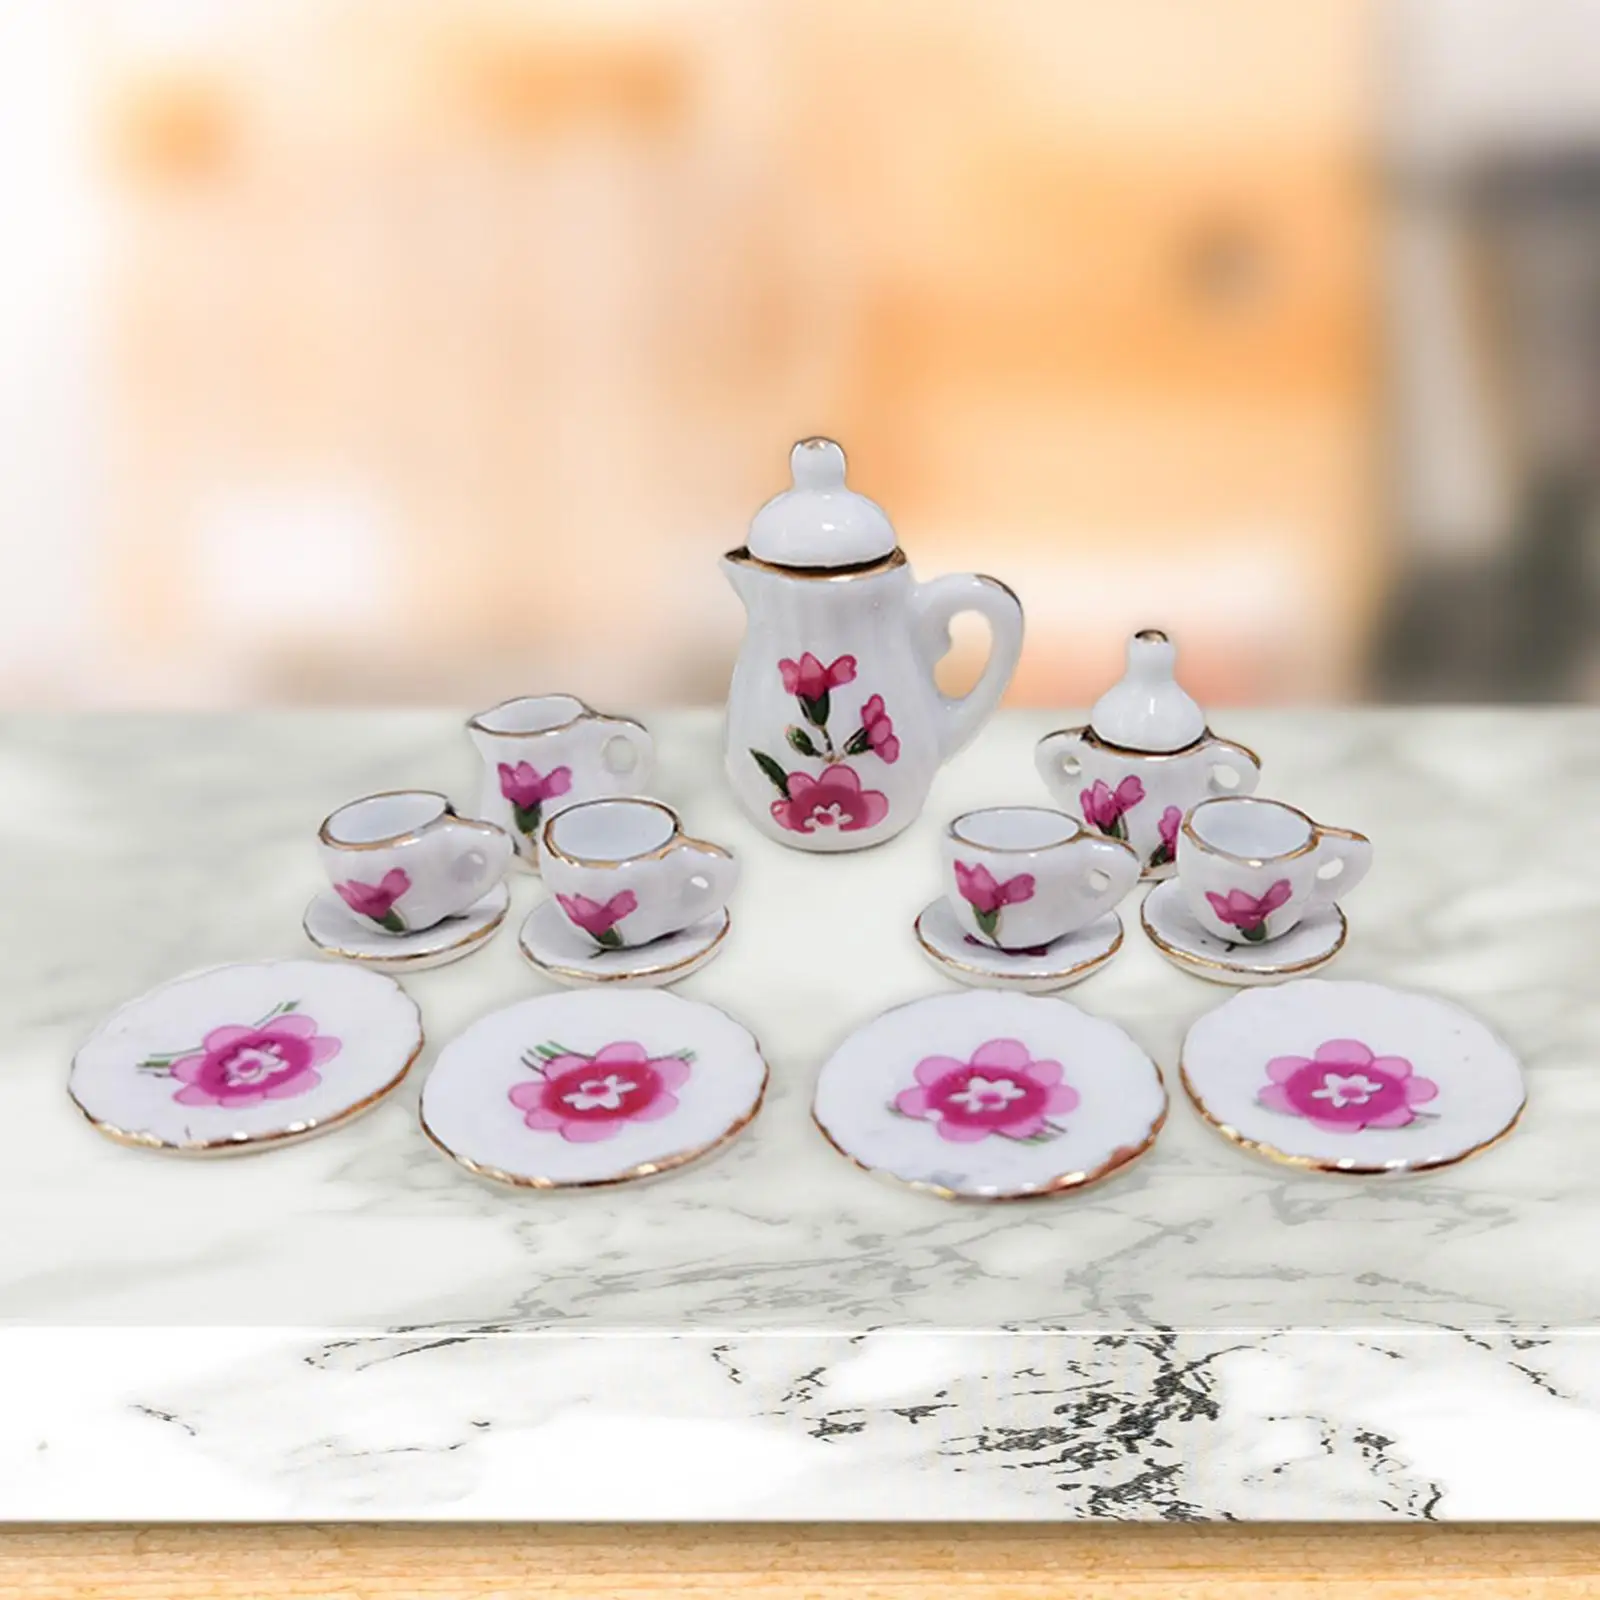 Dollhouse Miniature Porcelain Tea Cup Kitchen Home Scenery Supplies